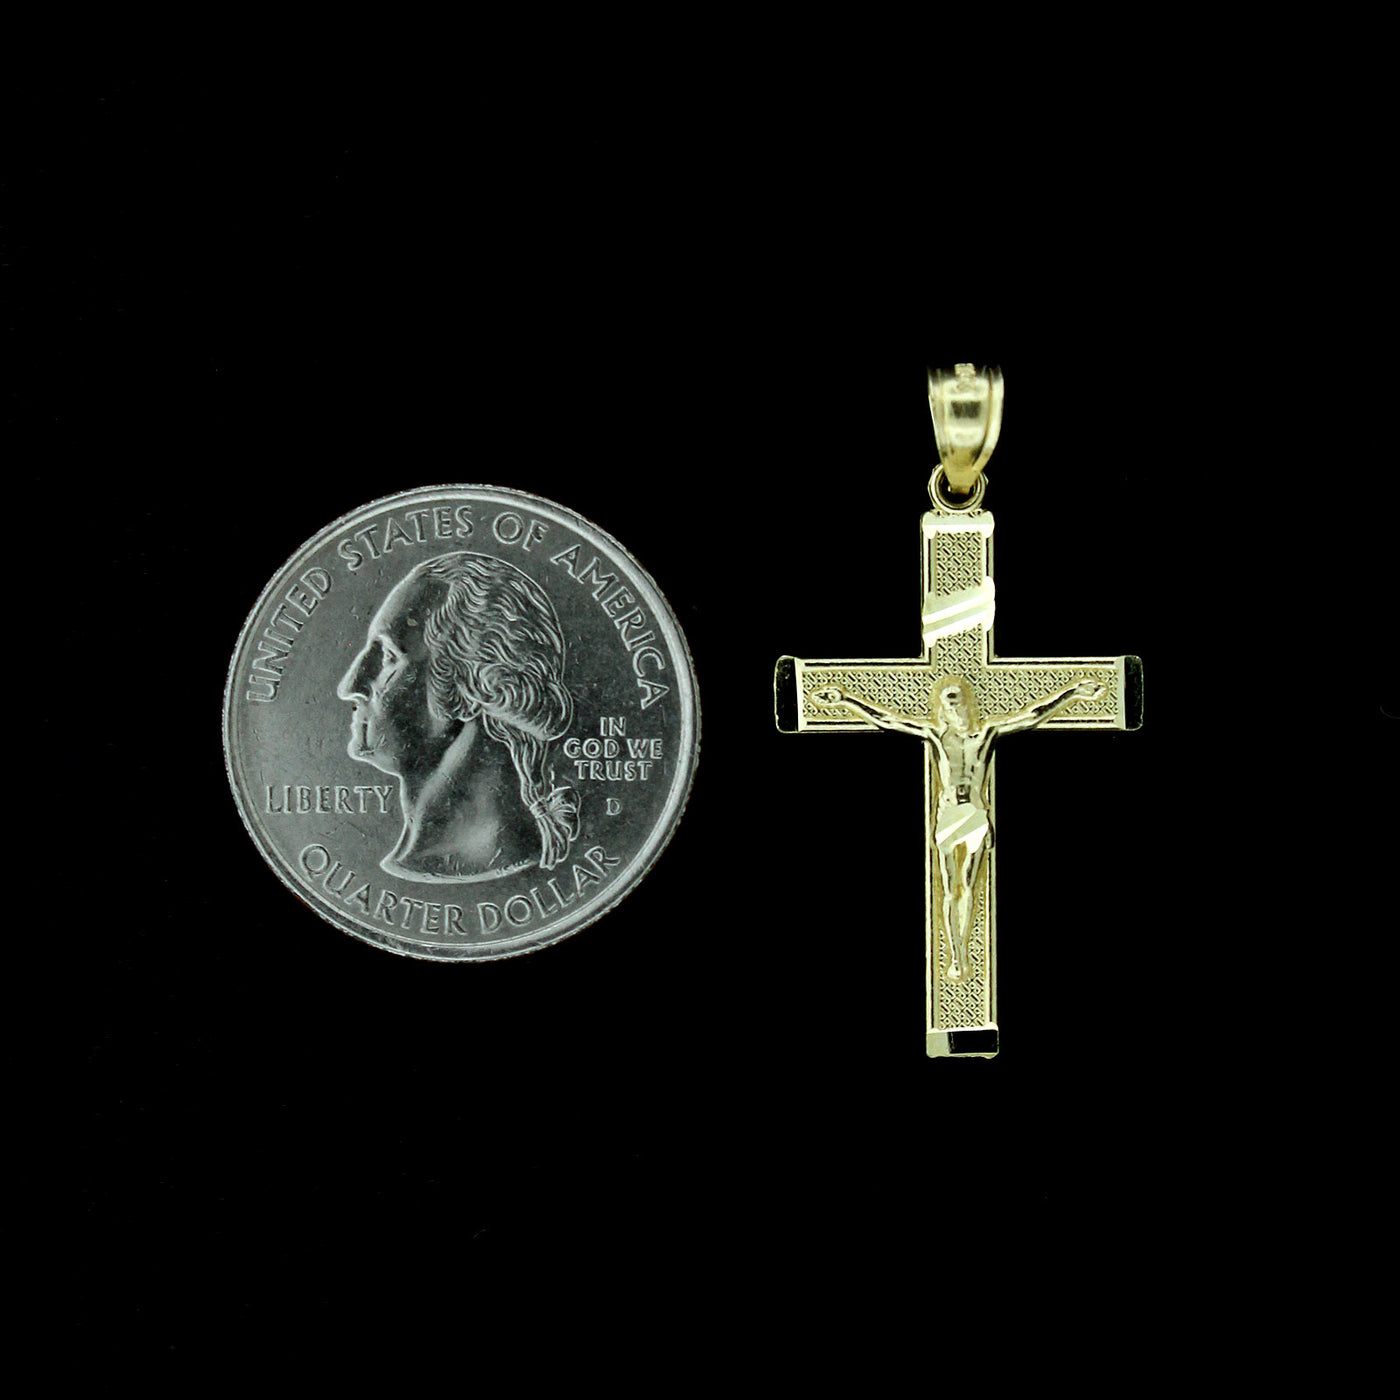 Real 10K Yellow Gold Diamond Cut Jesus Crucifix Cross Charm Pendant & 2.5mm Rope Chain Necklace Set